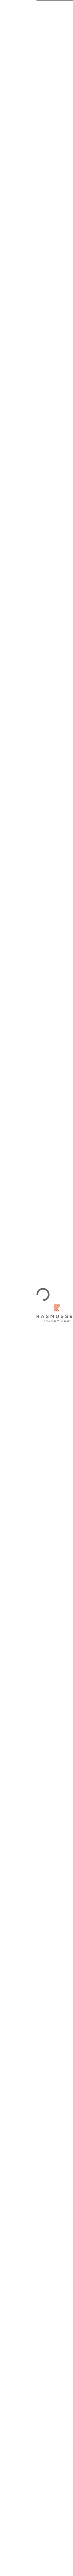 Rasmussen Injury Law - Mesa AZ Lawyers